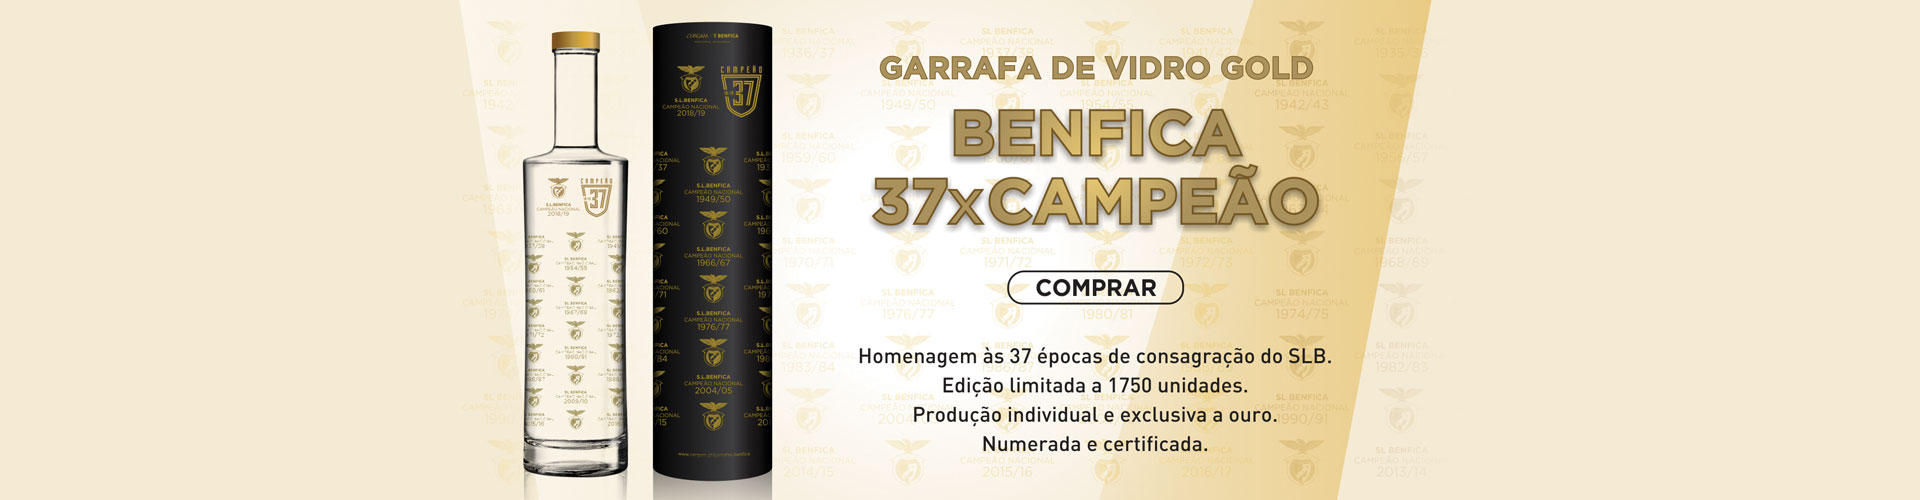 garrafas Benfica - banner 2